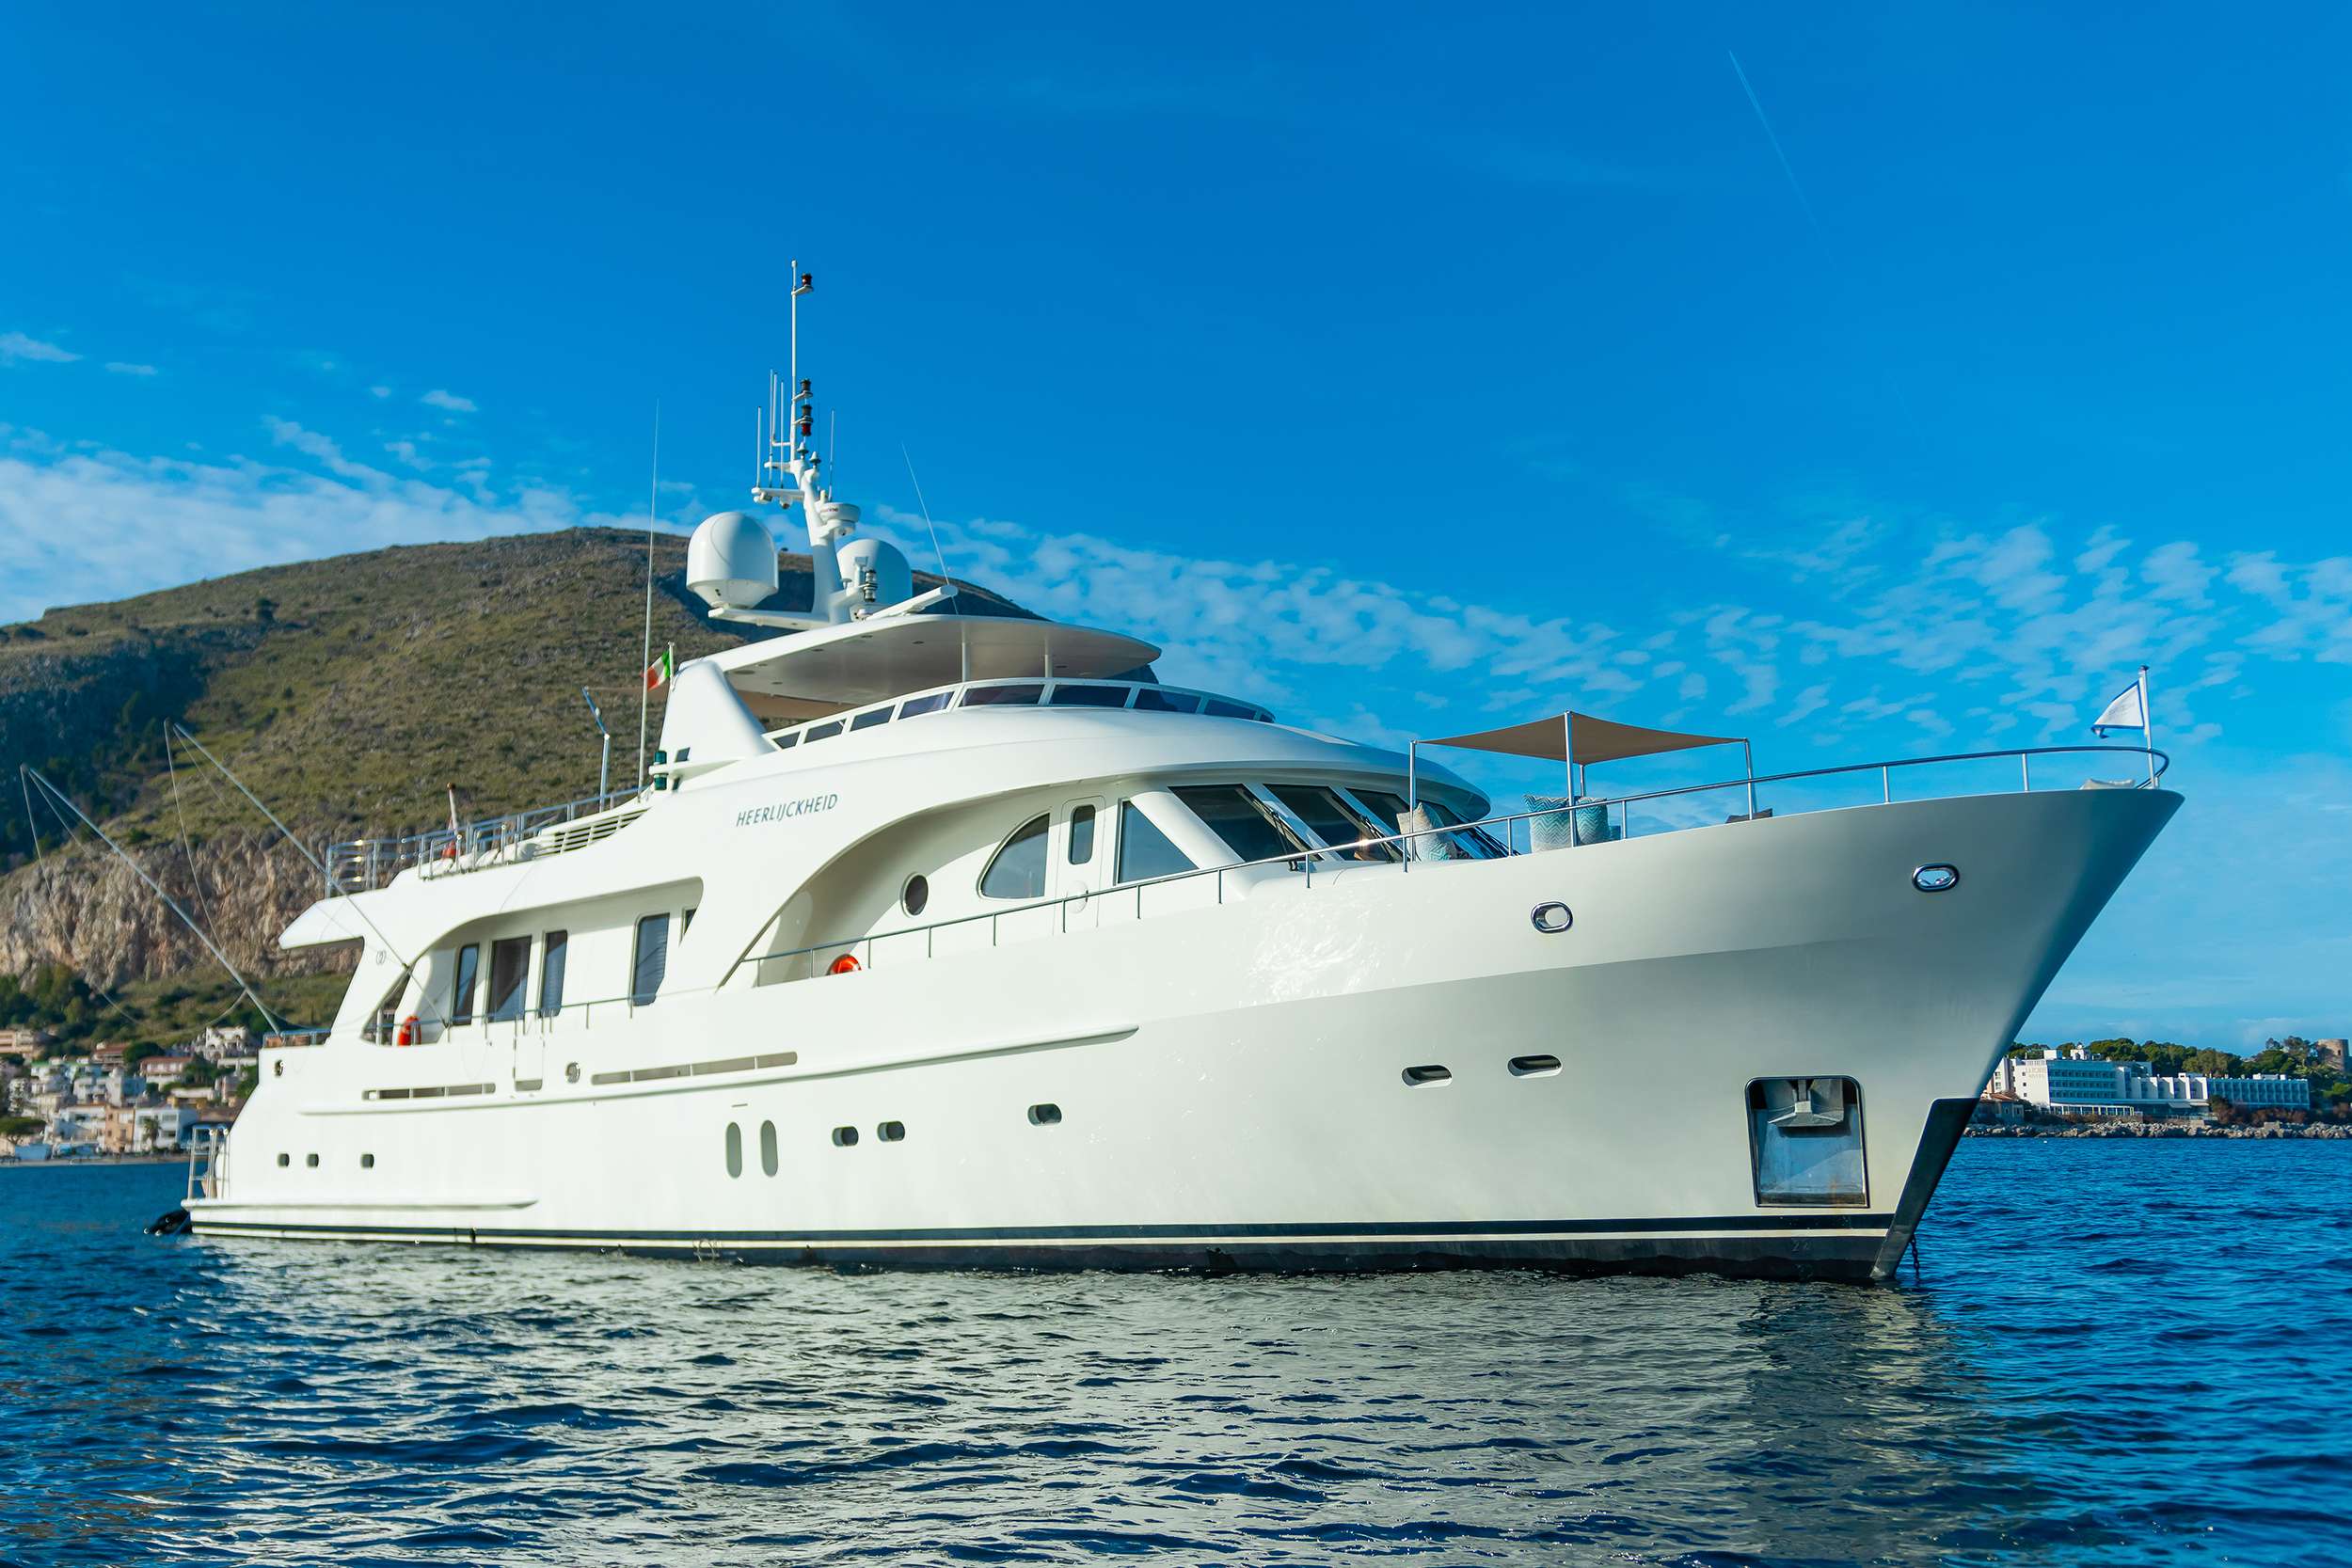 Heerlijckheid - Luxury yacht charter Montenegro & Boat hire in W. Med -Naples/Sicily, W. Med -Riviera/Cors/Sard., W. Med - Spain/Balearics 2